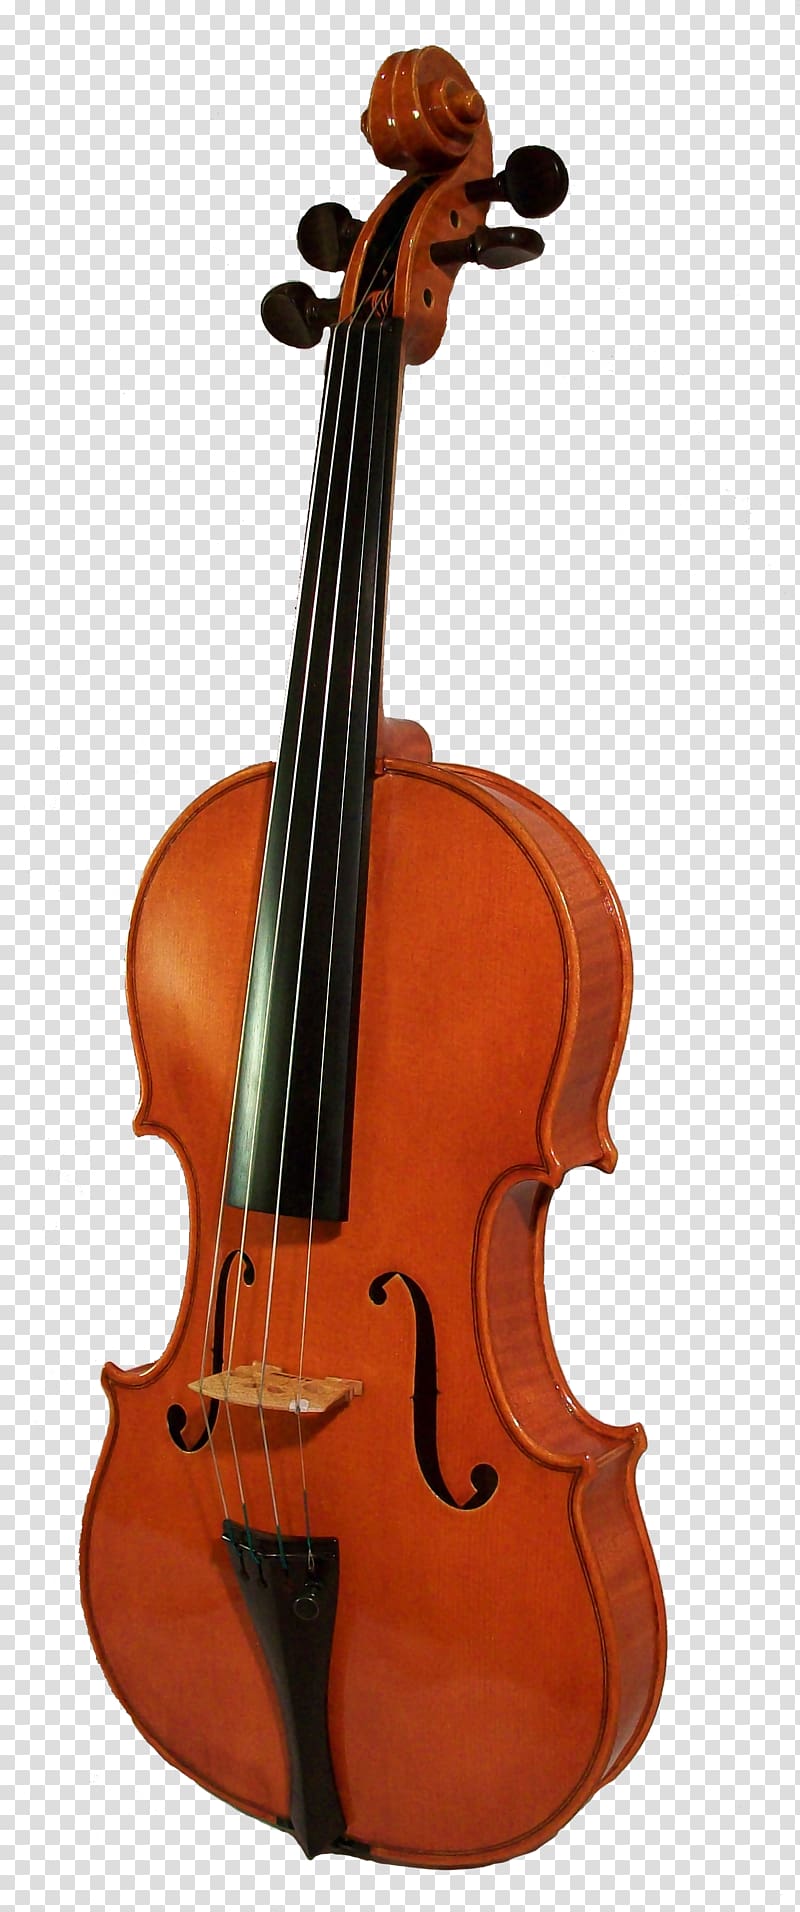 Violin Cello Musical instrument, Violin transparent background PNG clipart